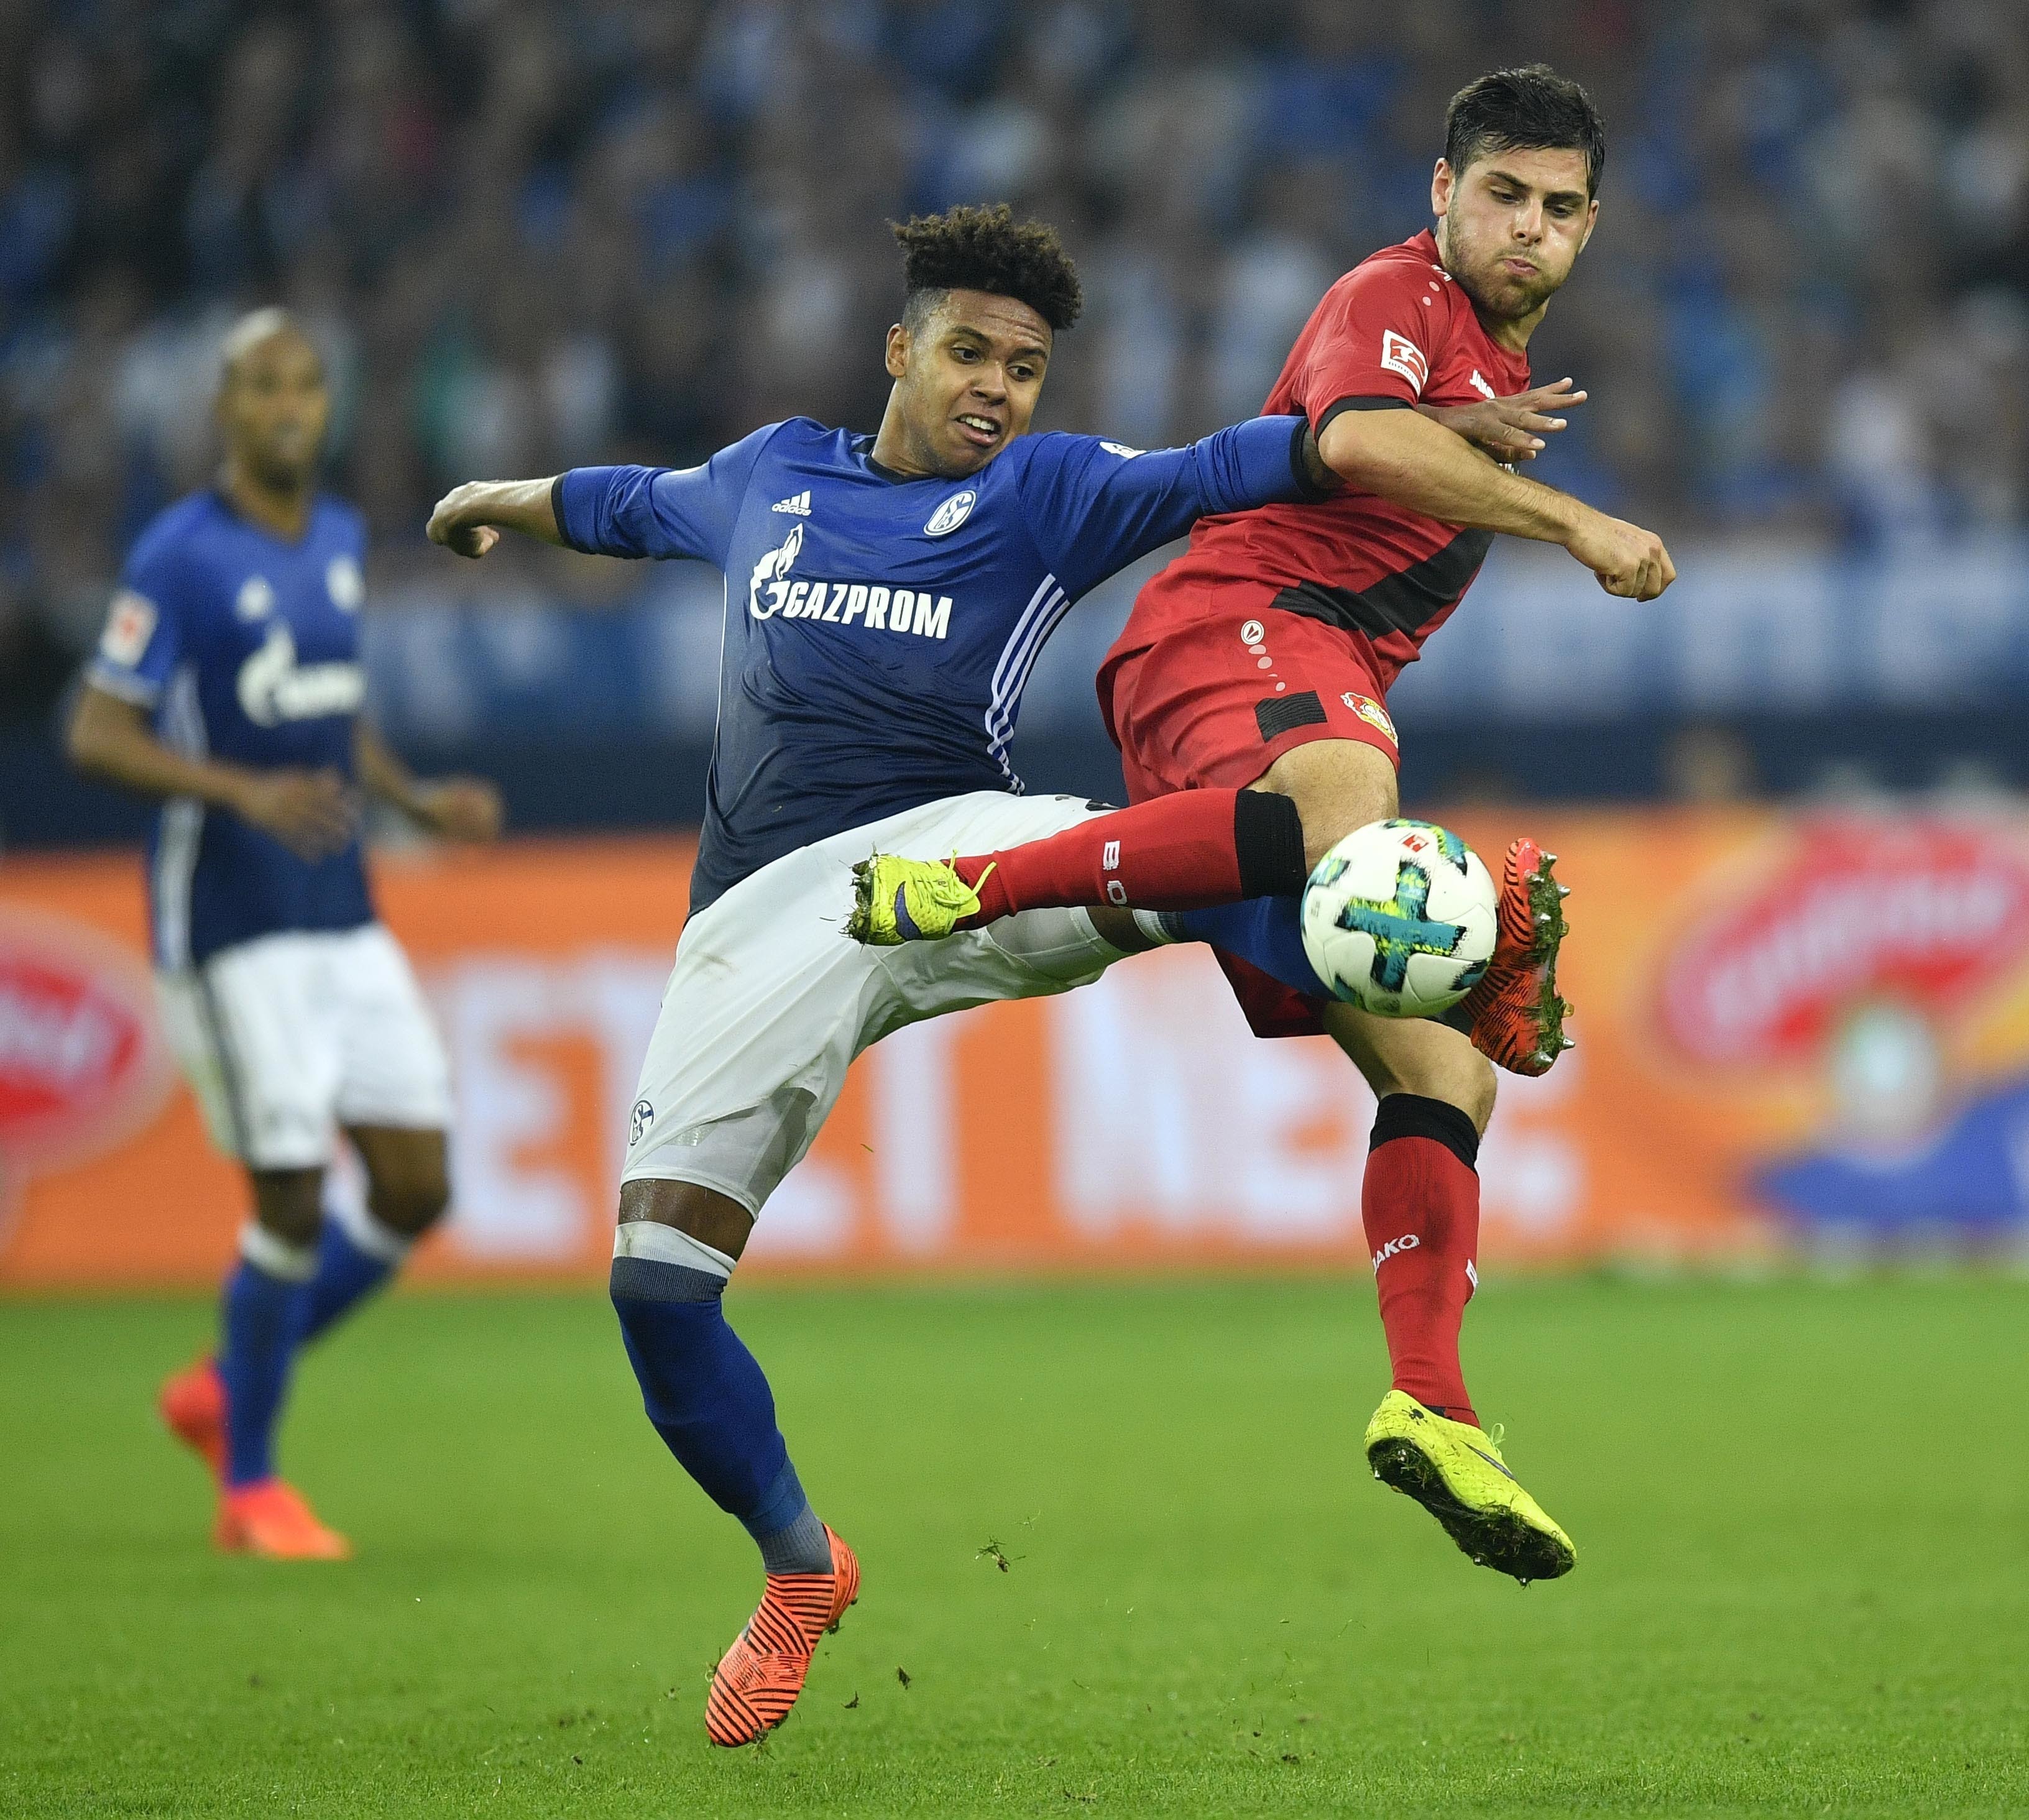 For American men's soccer hope, watch Bundesliga highlights